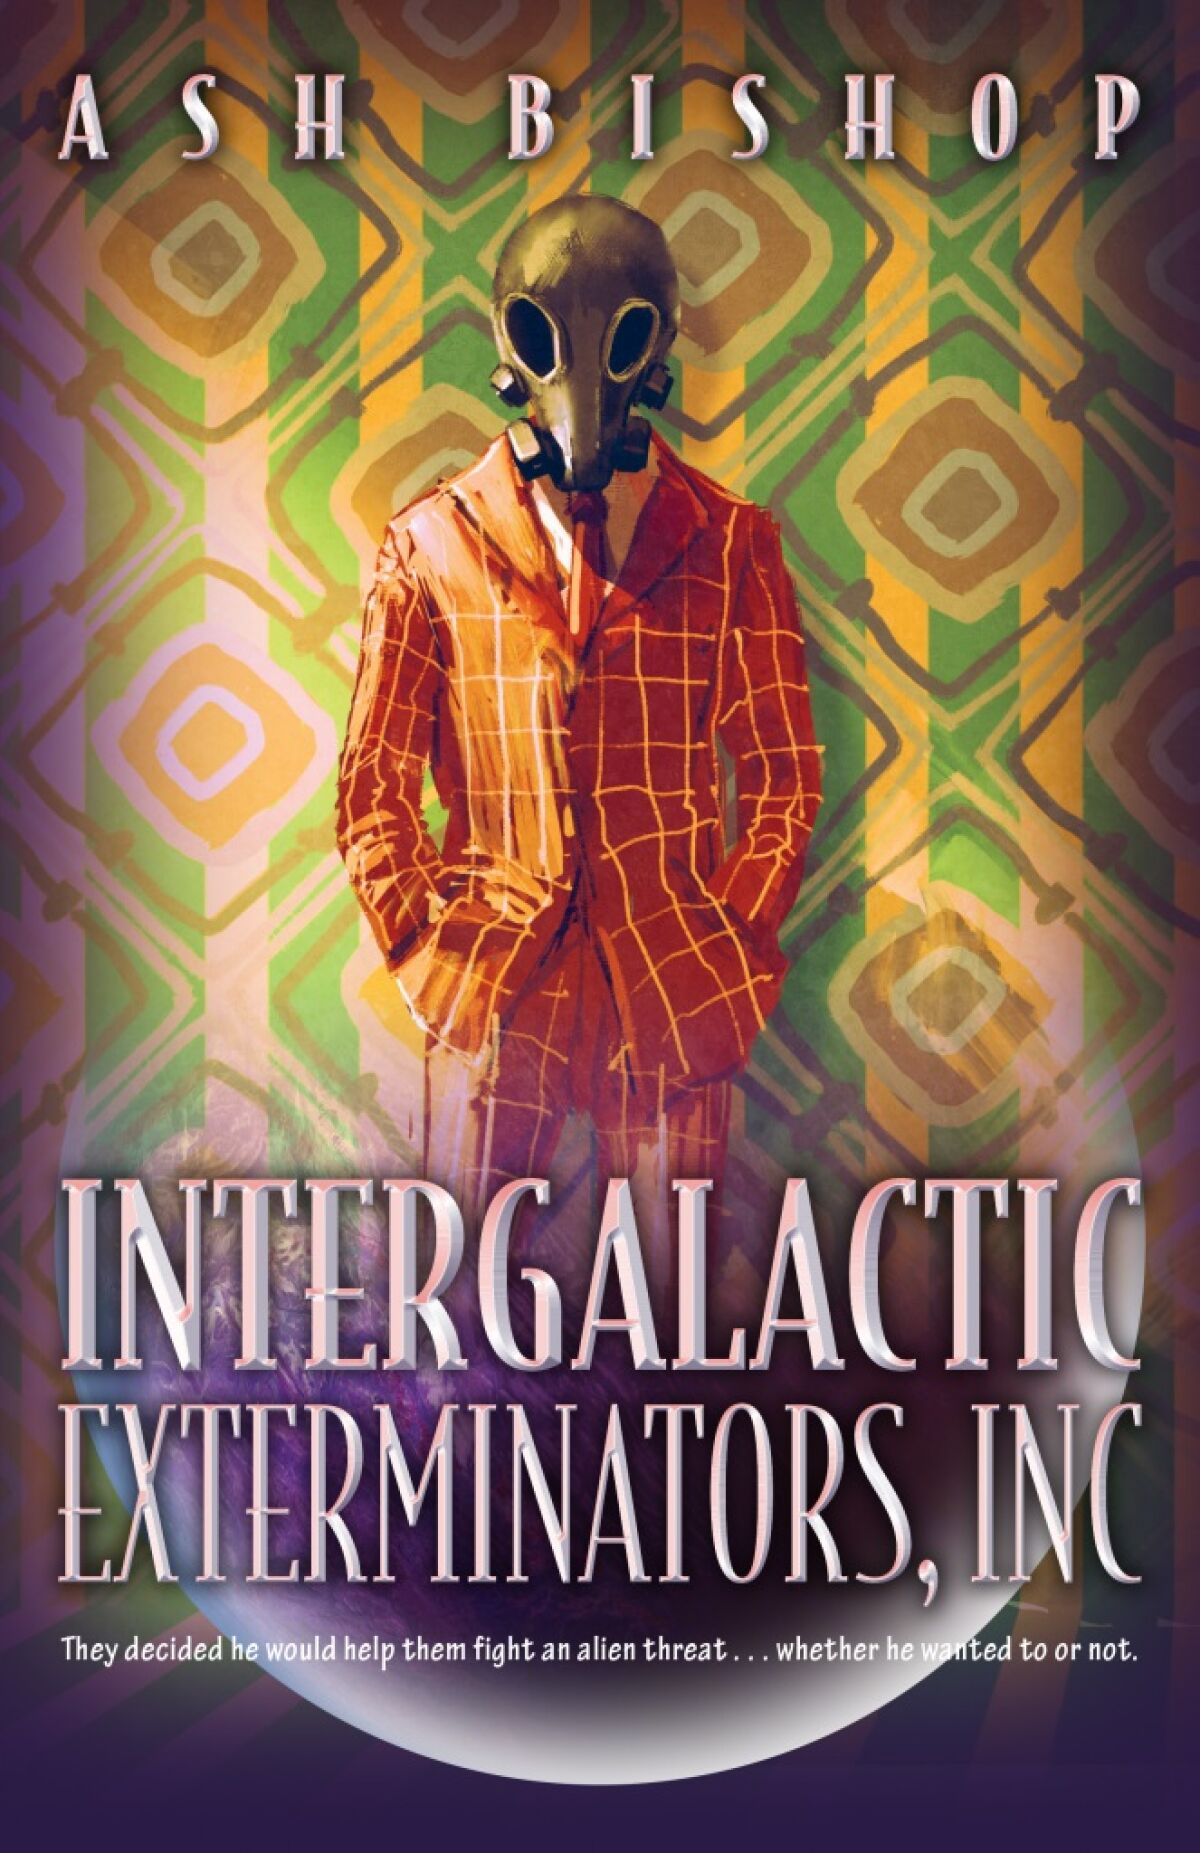 Author Ash Bishop's "Intergalactic Exterminators Inc." 